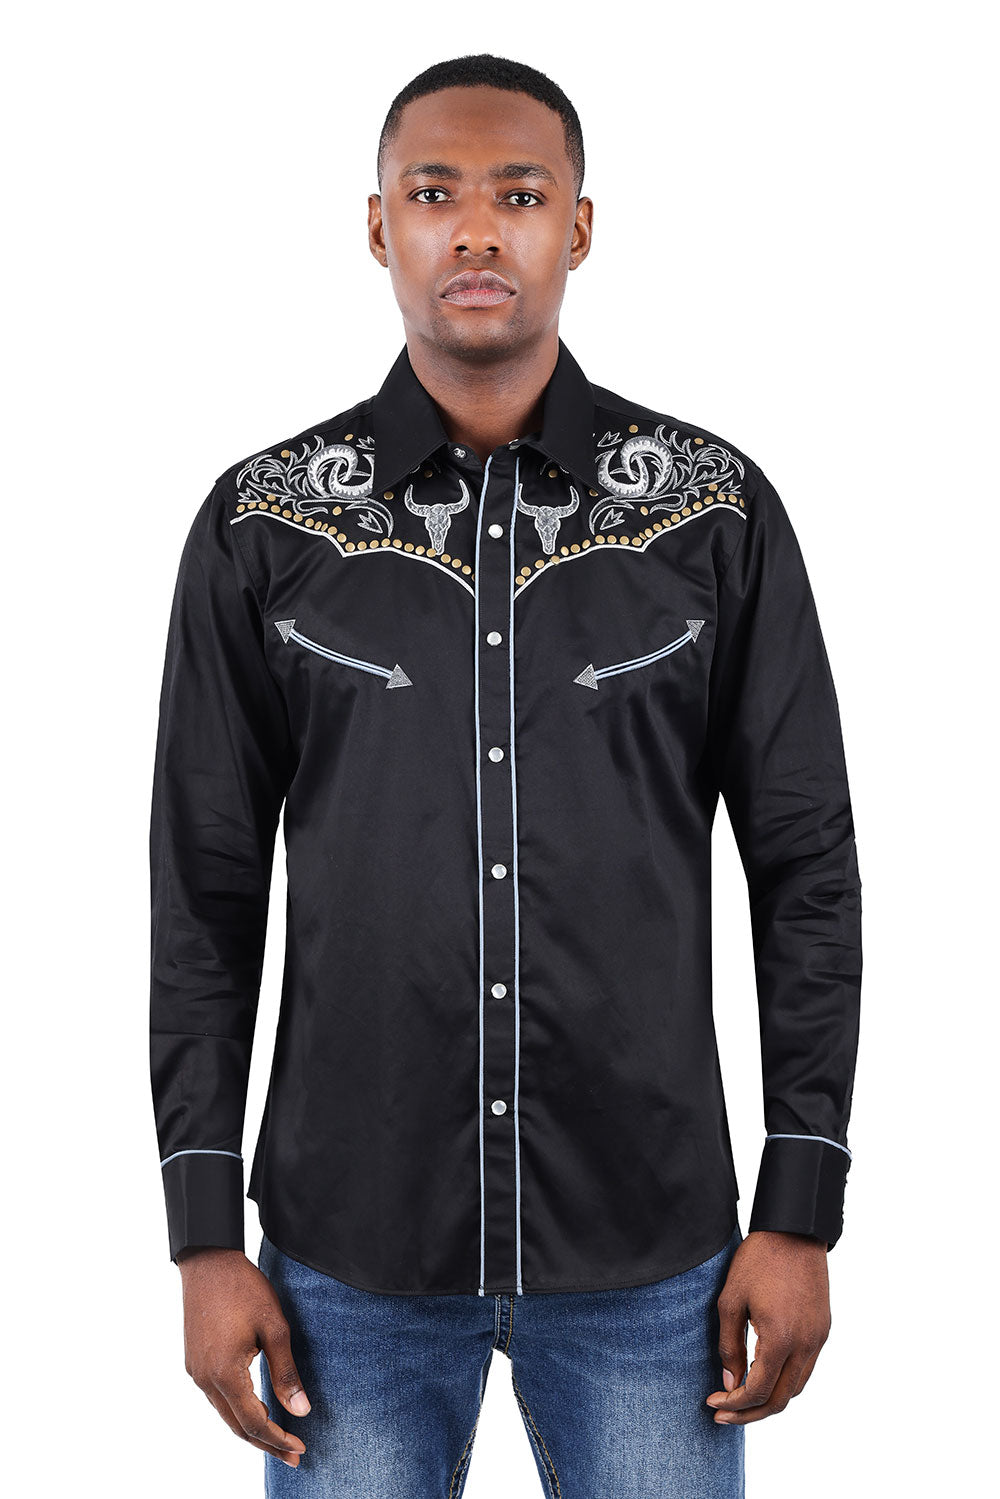 BARABAS Men's Bulls Embroidered Studded Floral Western Shirts 3WS4 Black